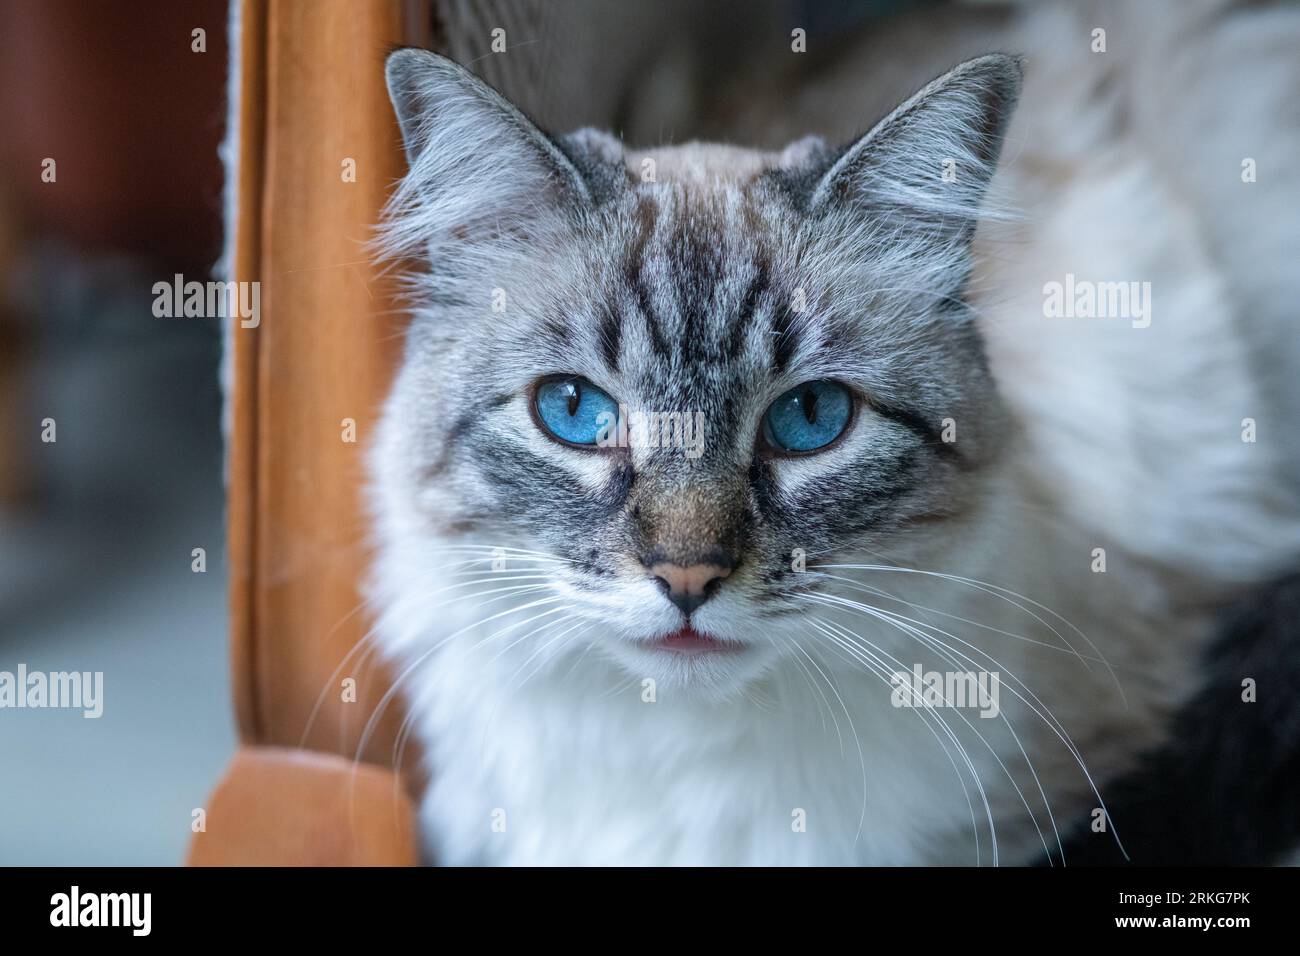 Cat's close-up Stock Photo